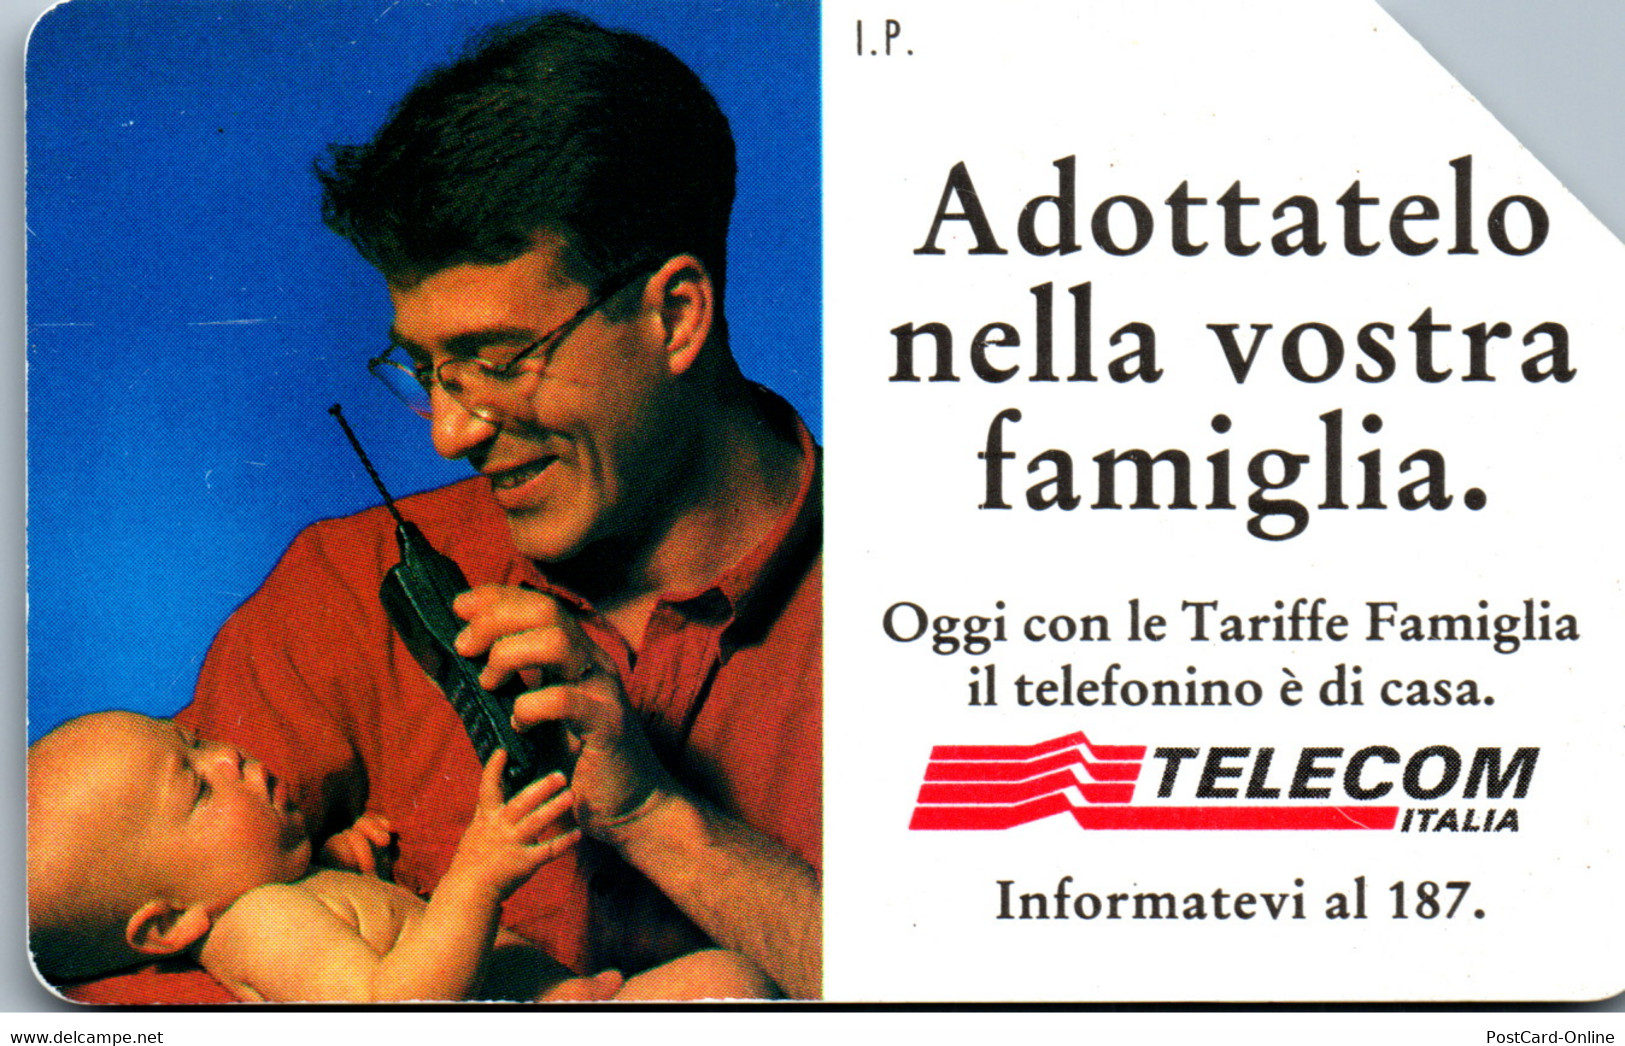 32530 - Italien - Carta Telefonica - Öff. Diverse TK